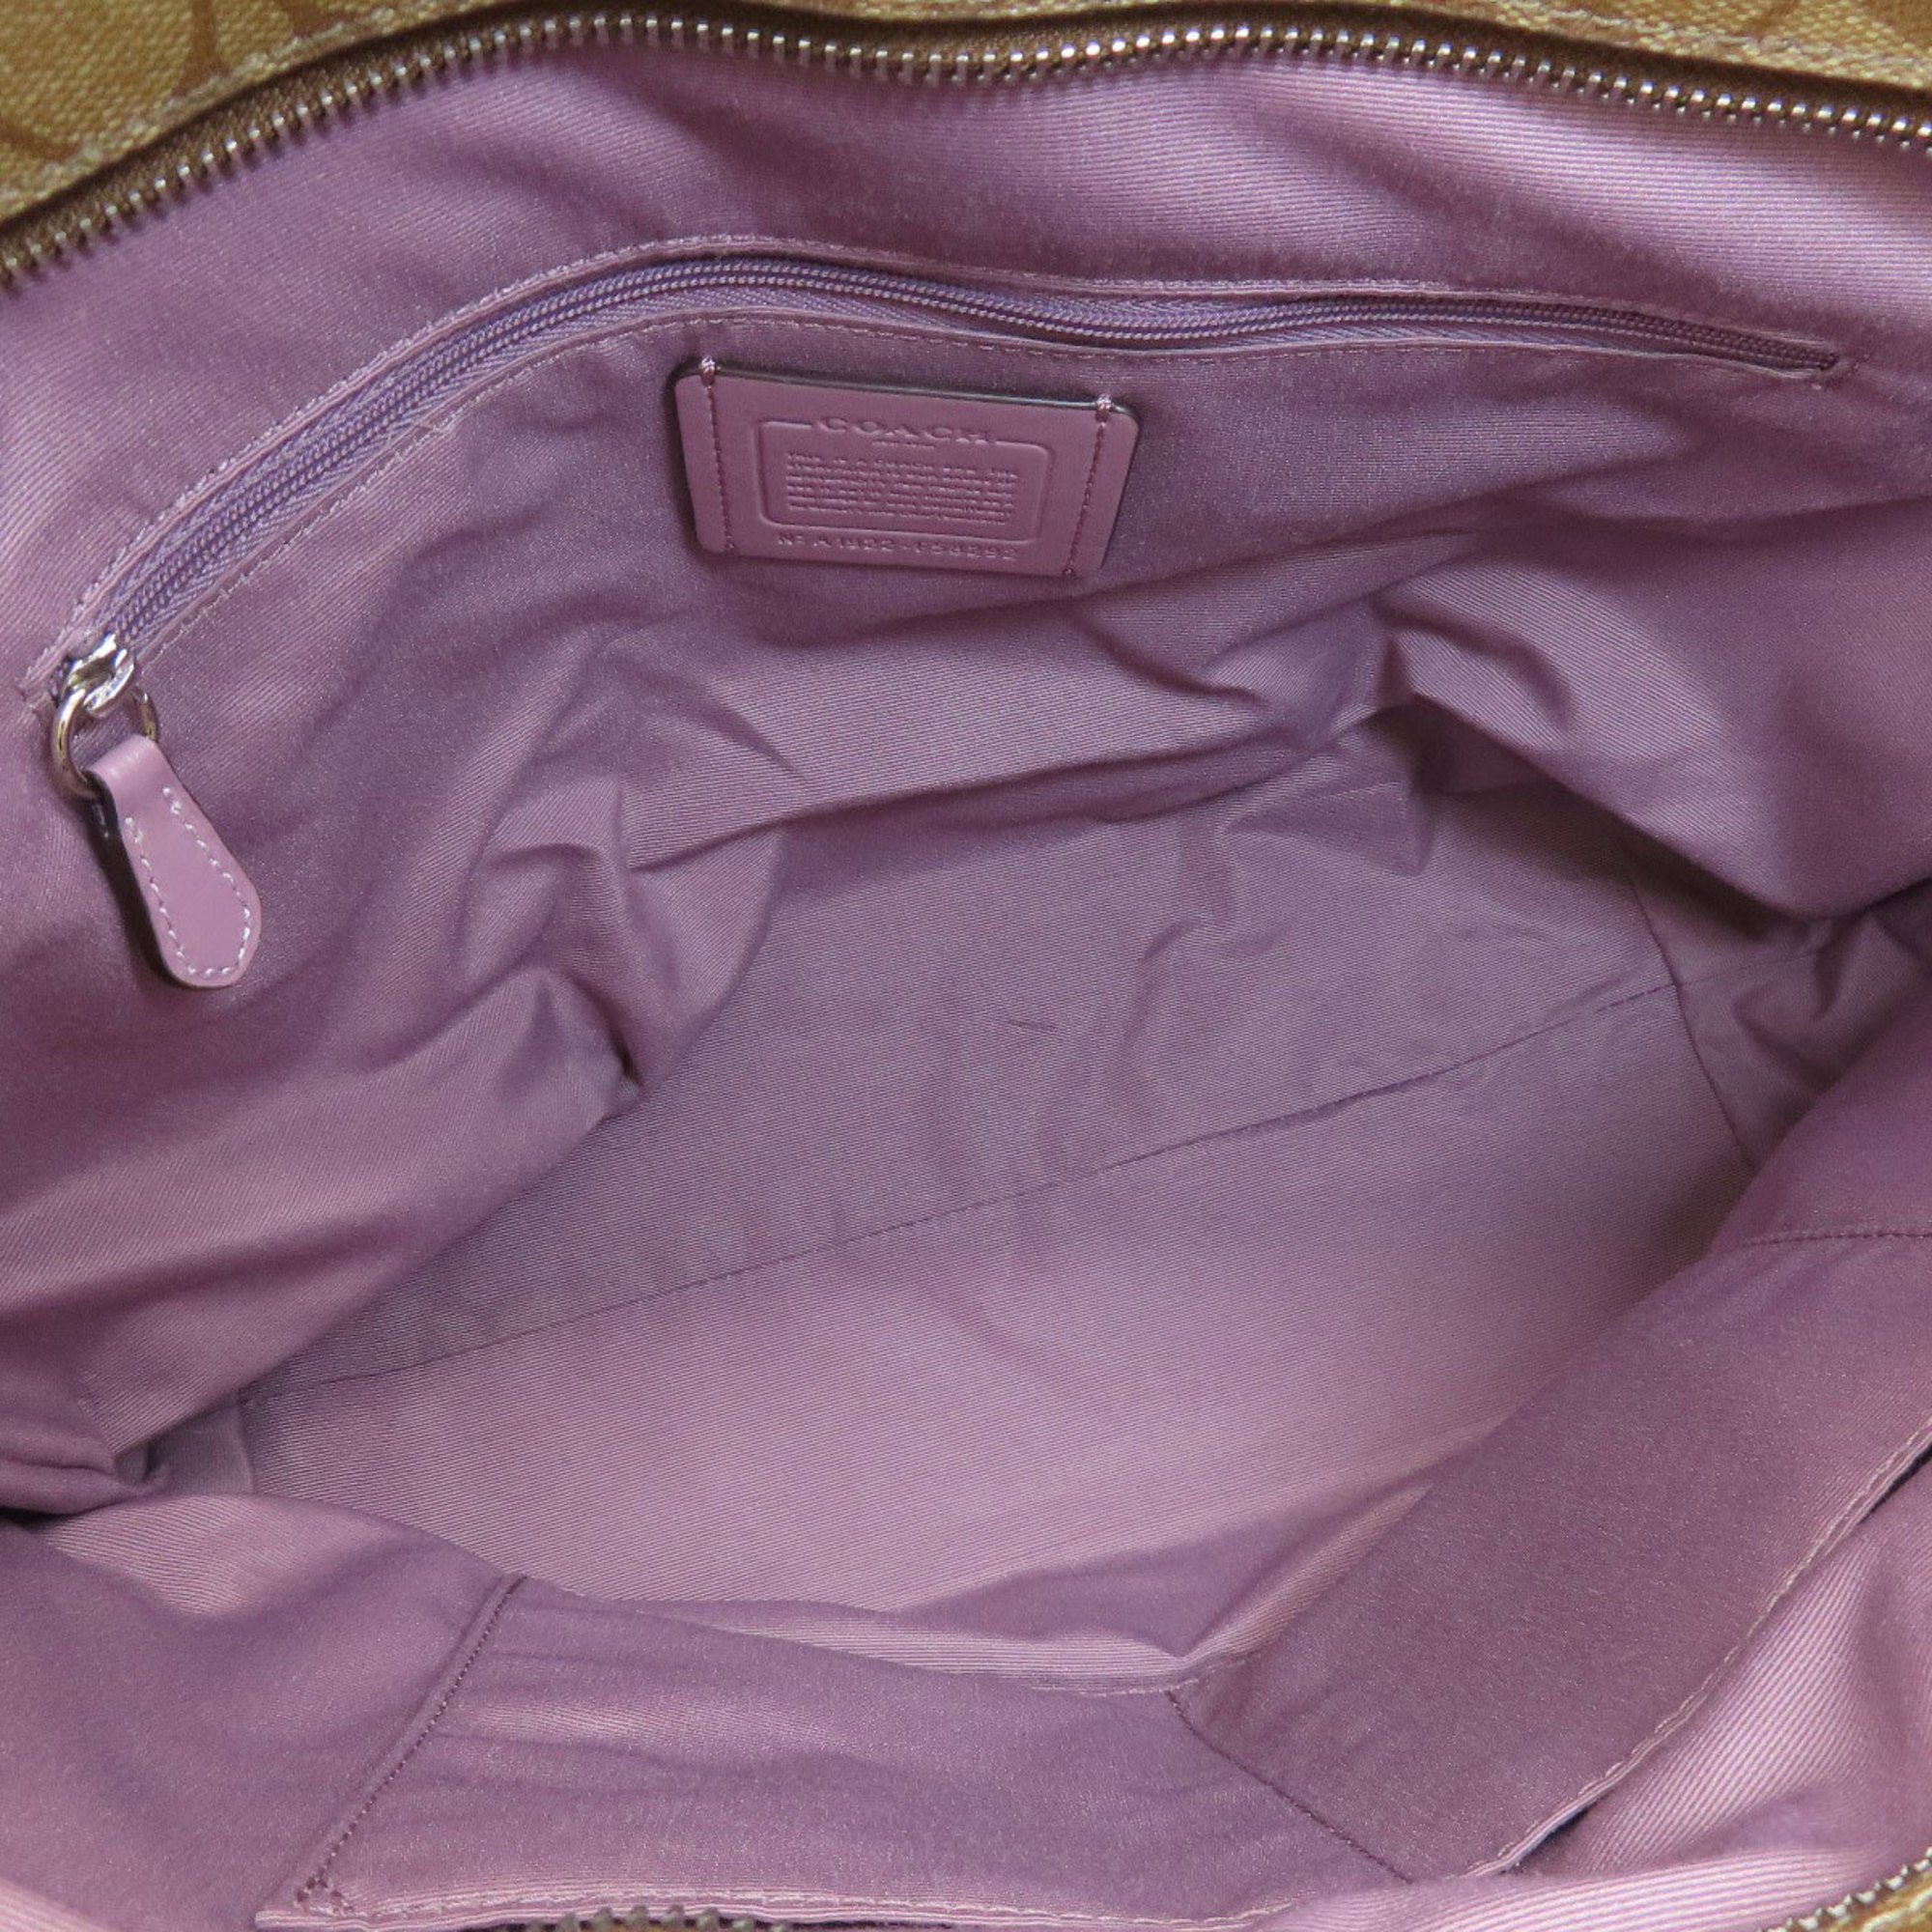 Coach F58292 Signature Tote Bag for Women